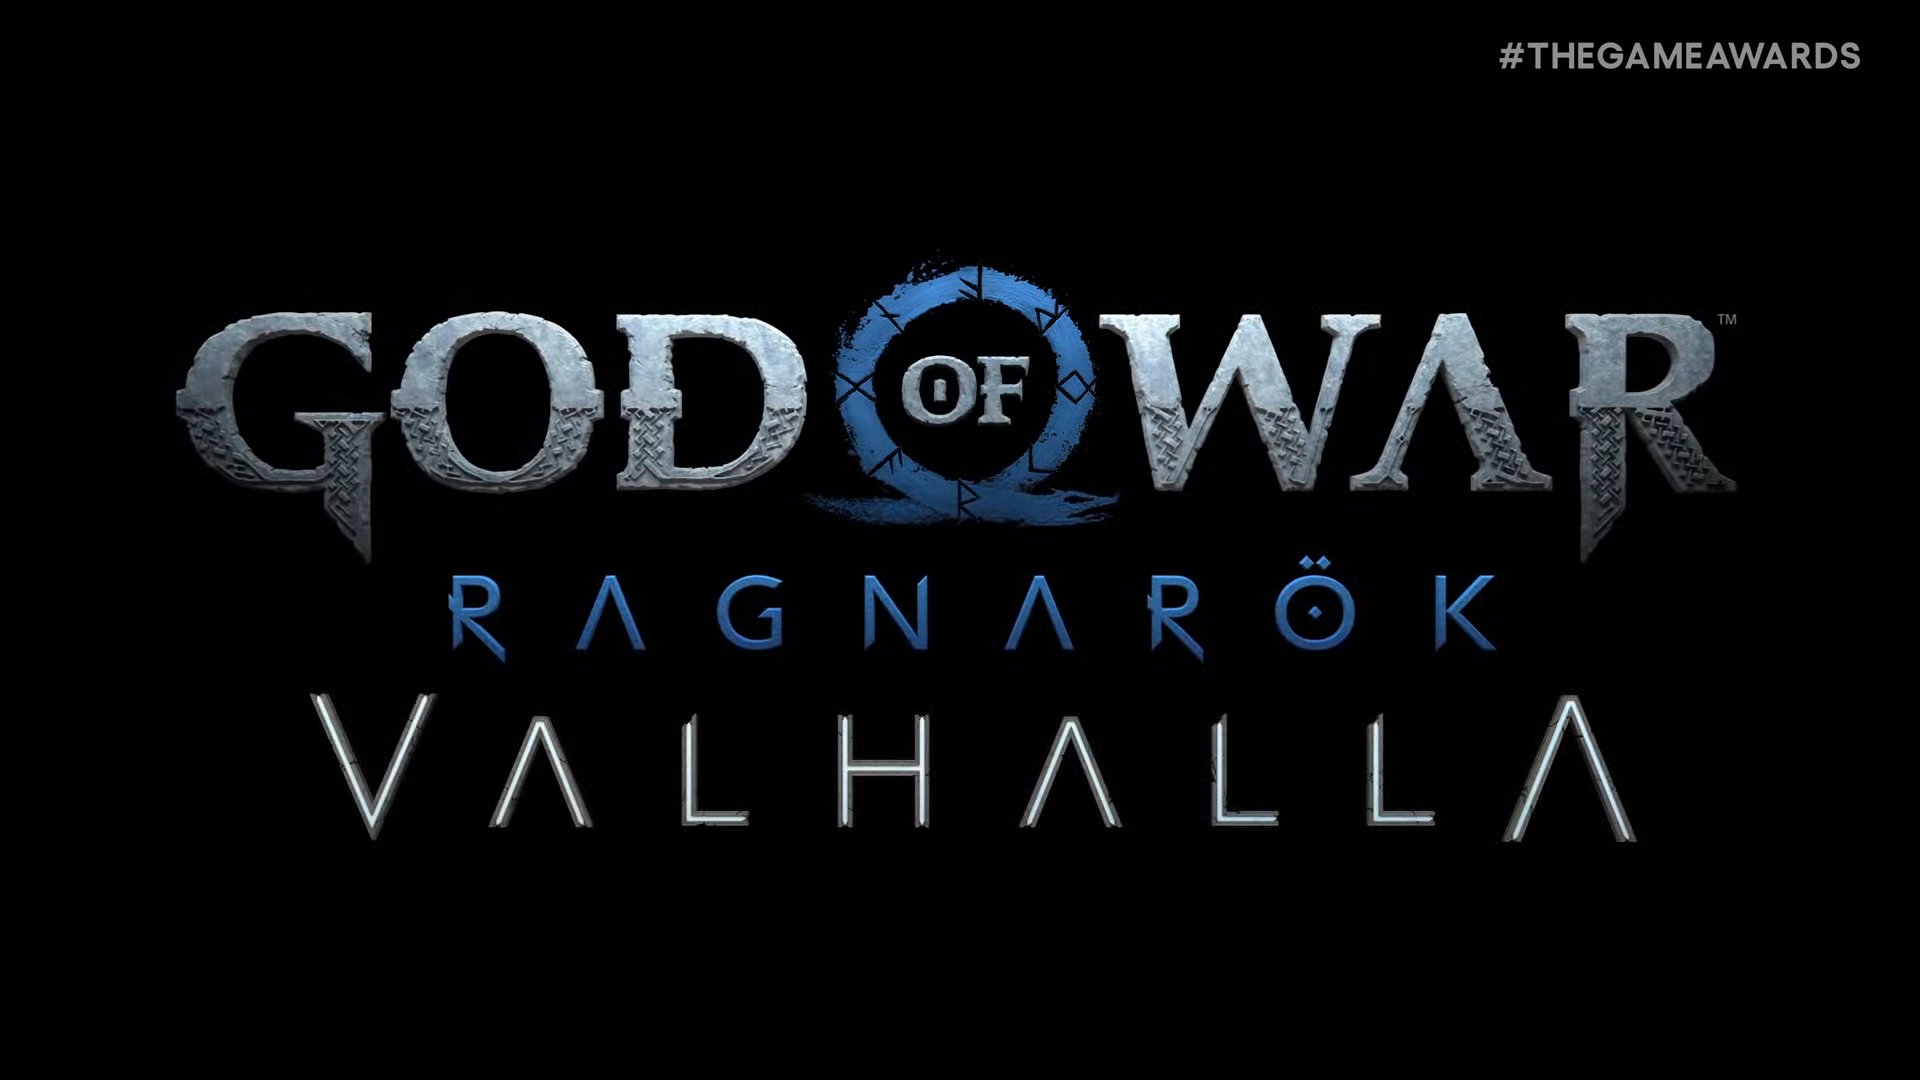 God of War Ragnarok Valhalla Announced, Free DLC Out December 12